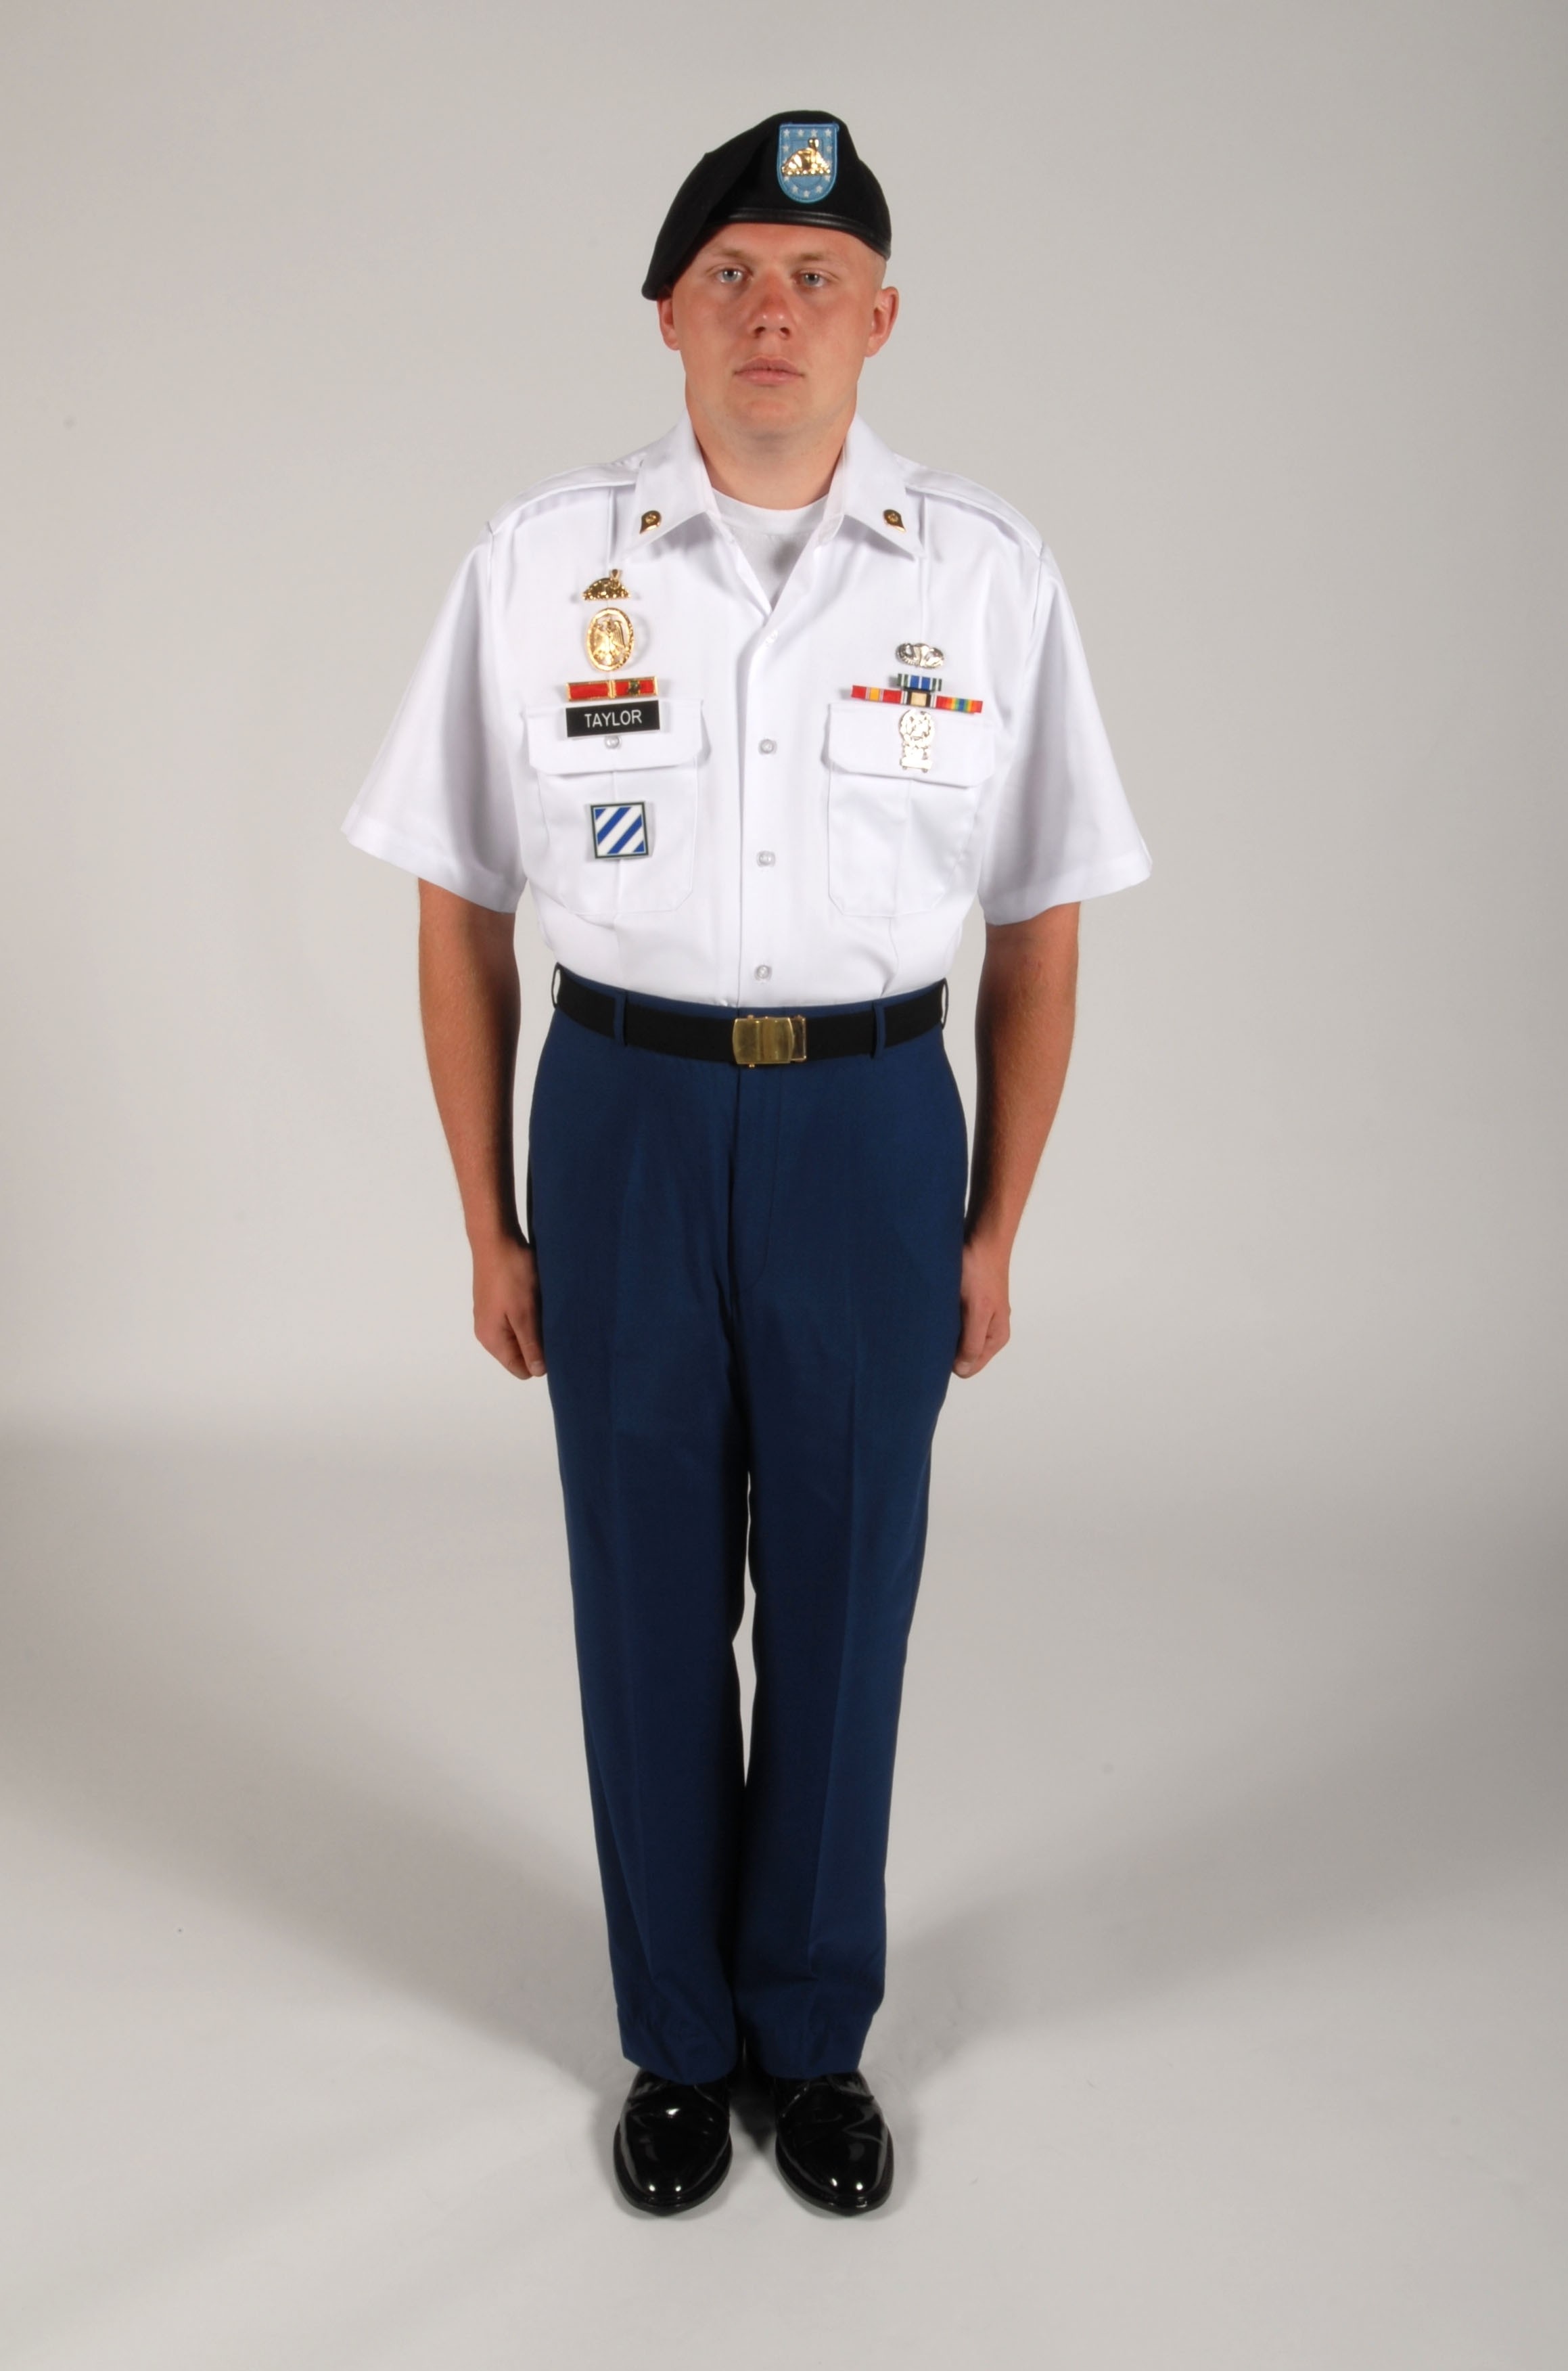 Army Service Dress Blue Uniform 47